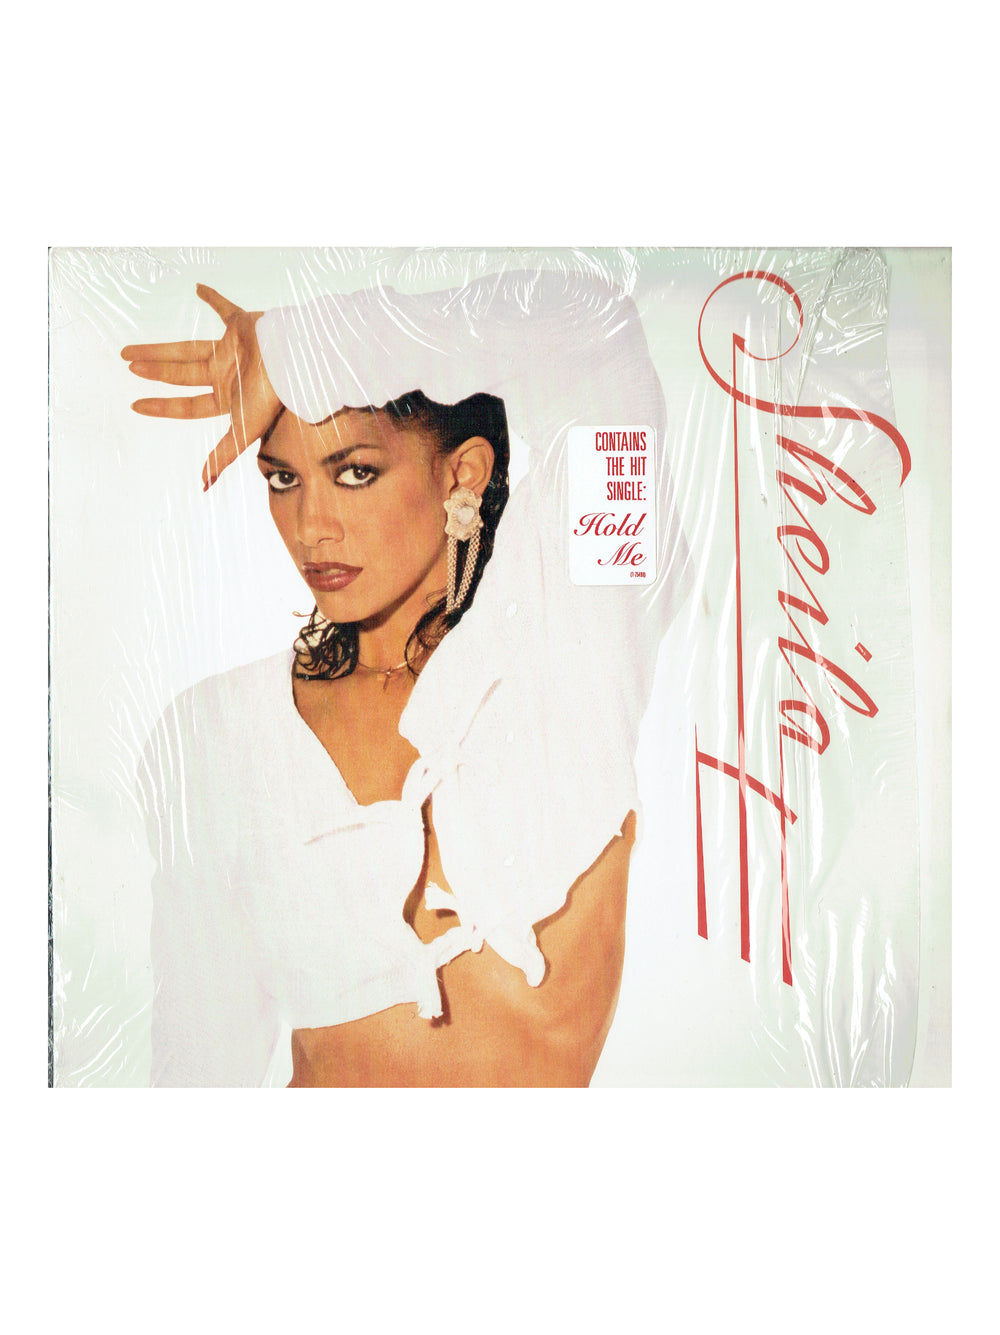 Prince – Sheila E Self Titled Vinyl Album 10 Tracks USA Release 1987 Paisley Park Prince WITH HYPE